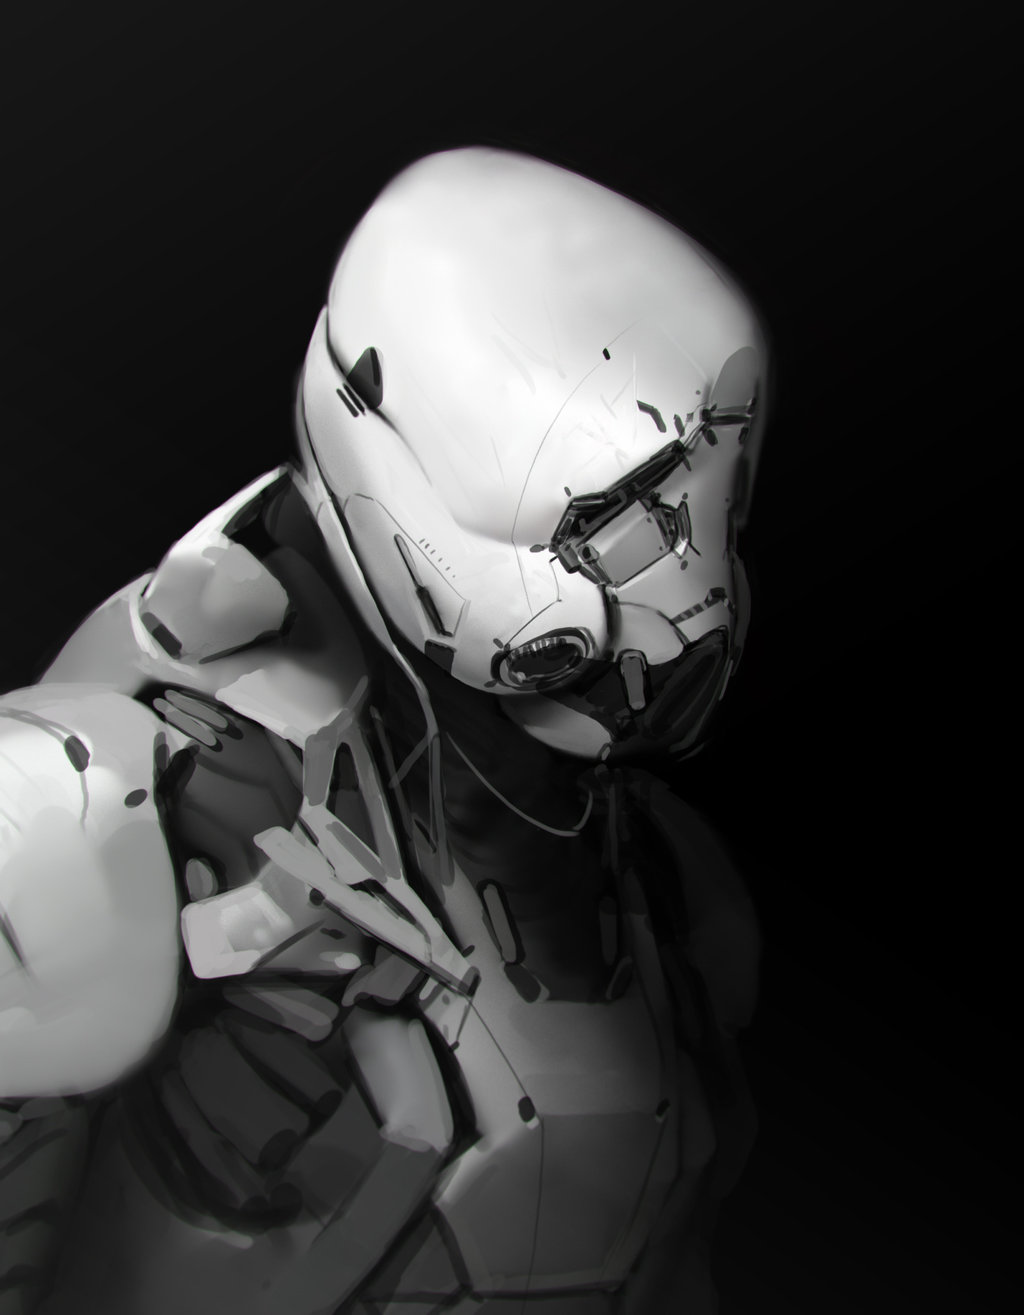 Bashed sad robot face via Archillect